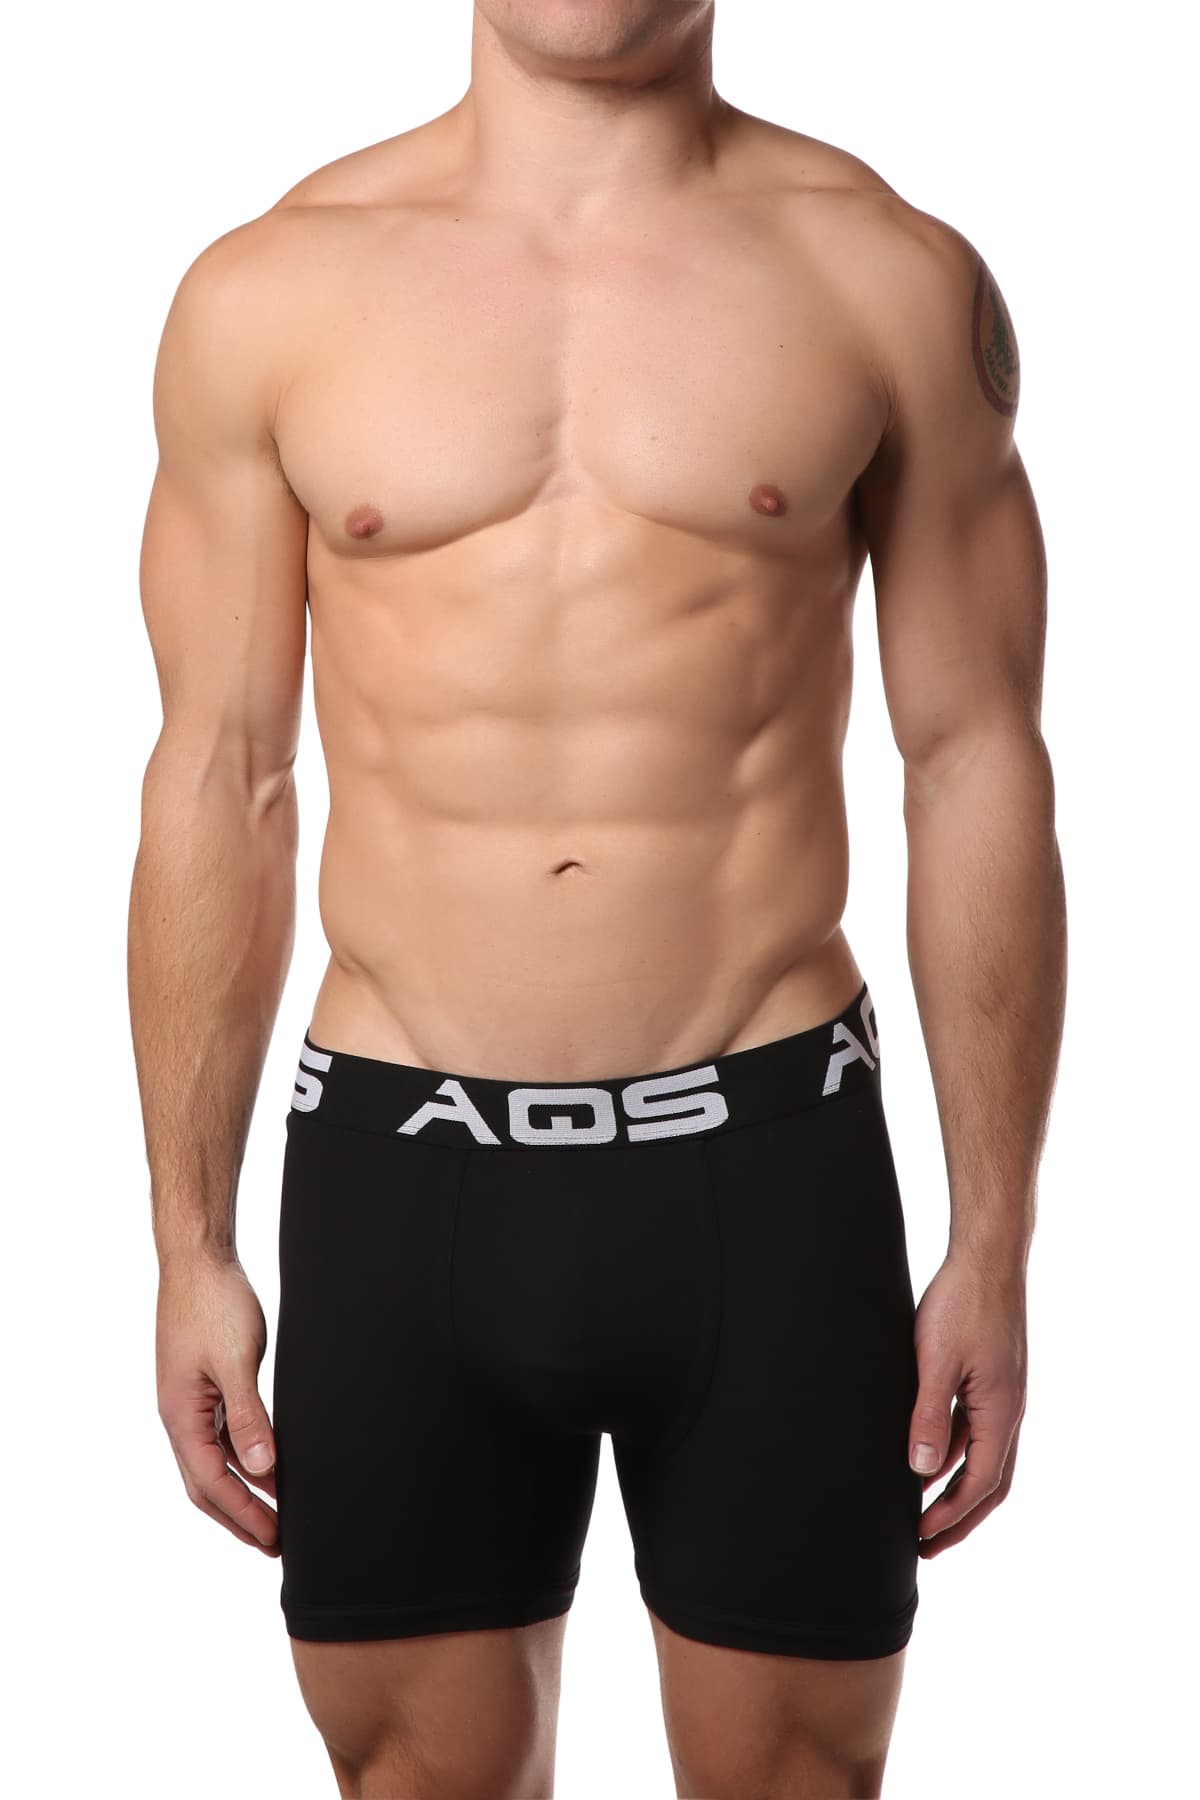 AQS Black/Grey/White Stripe Boxer Brief 3-Pack